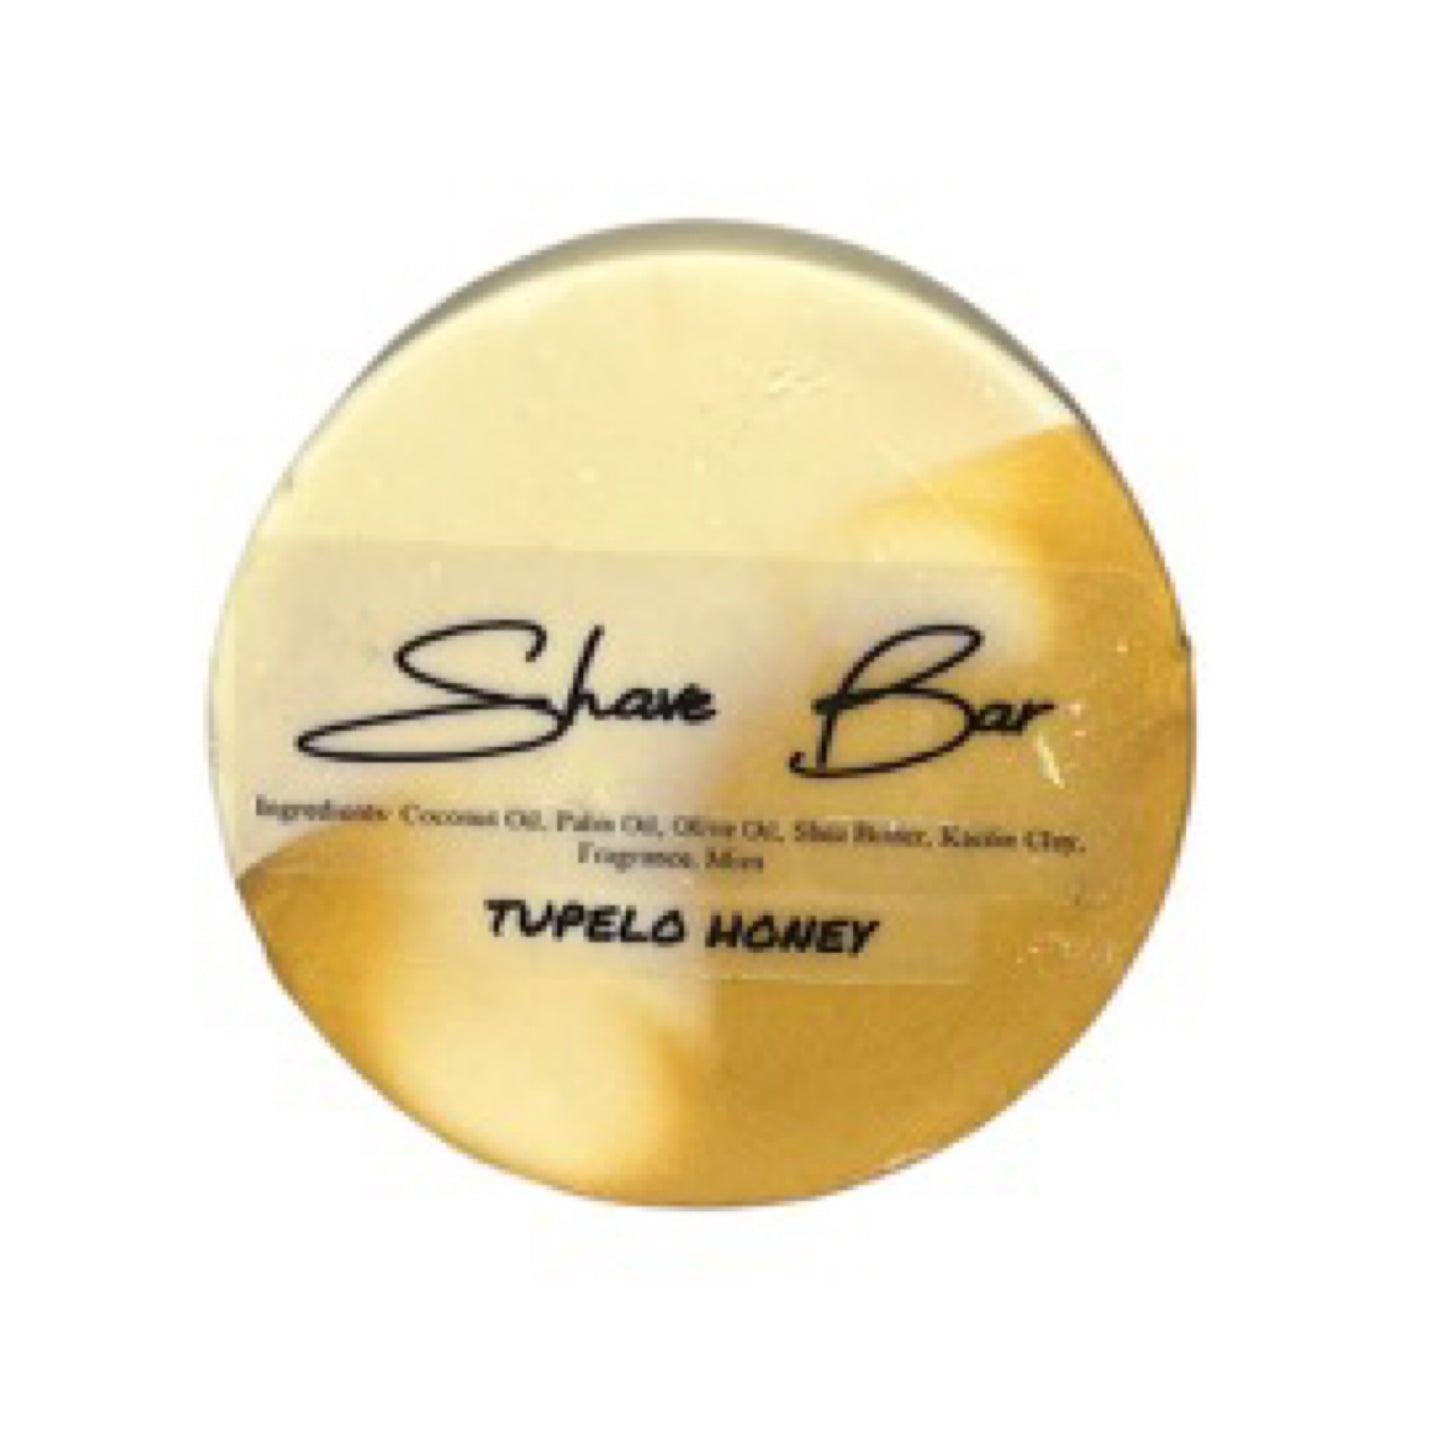 Tupelo Honey Shave Bar